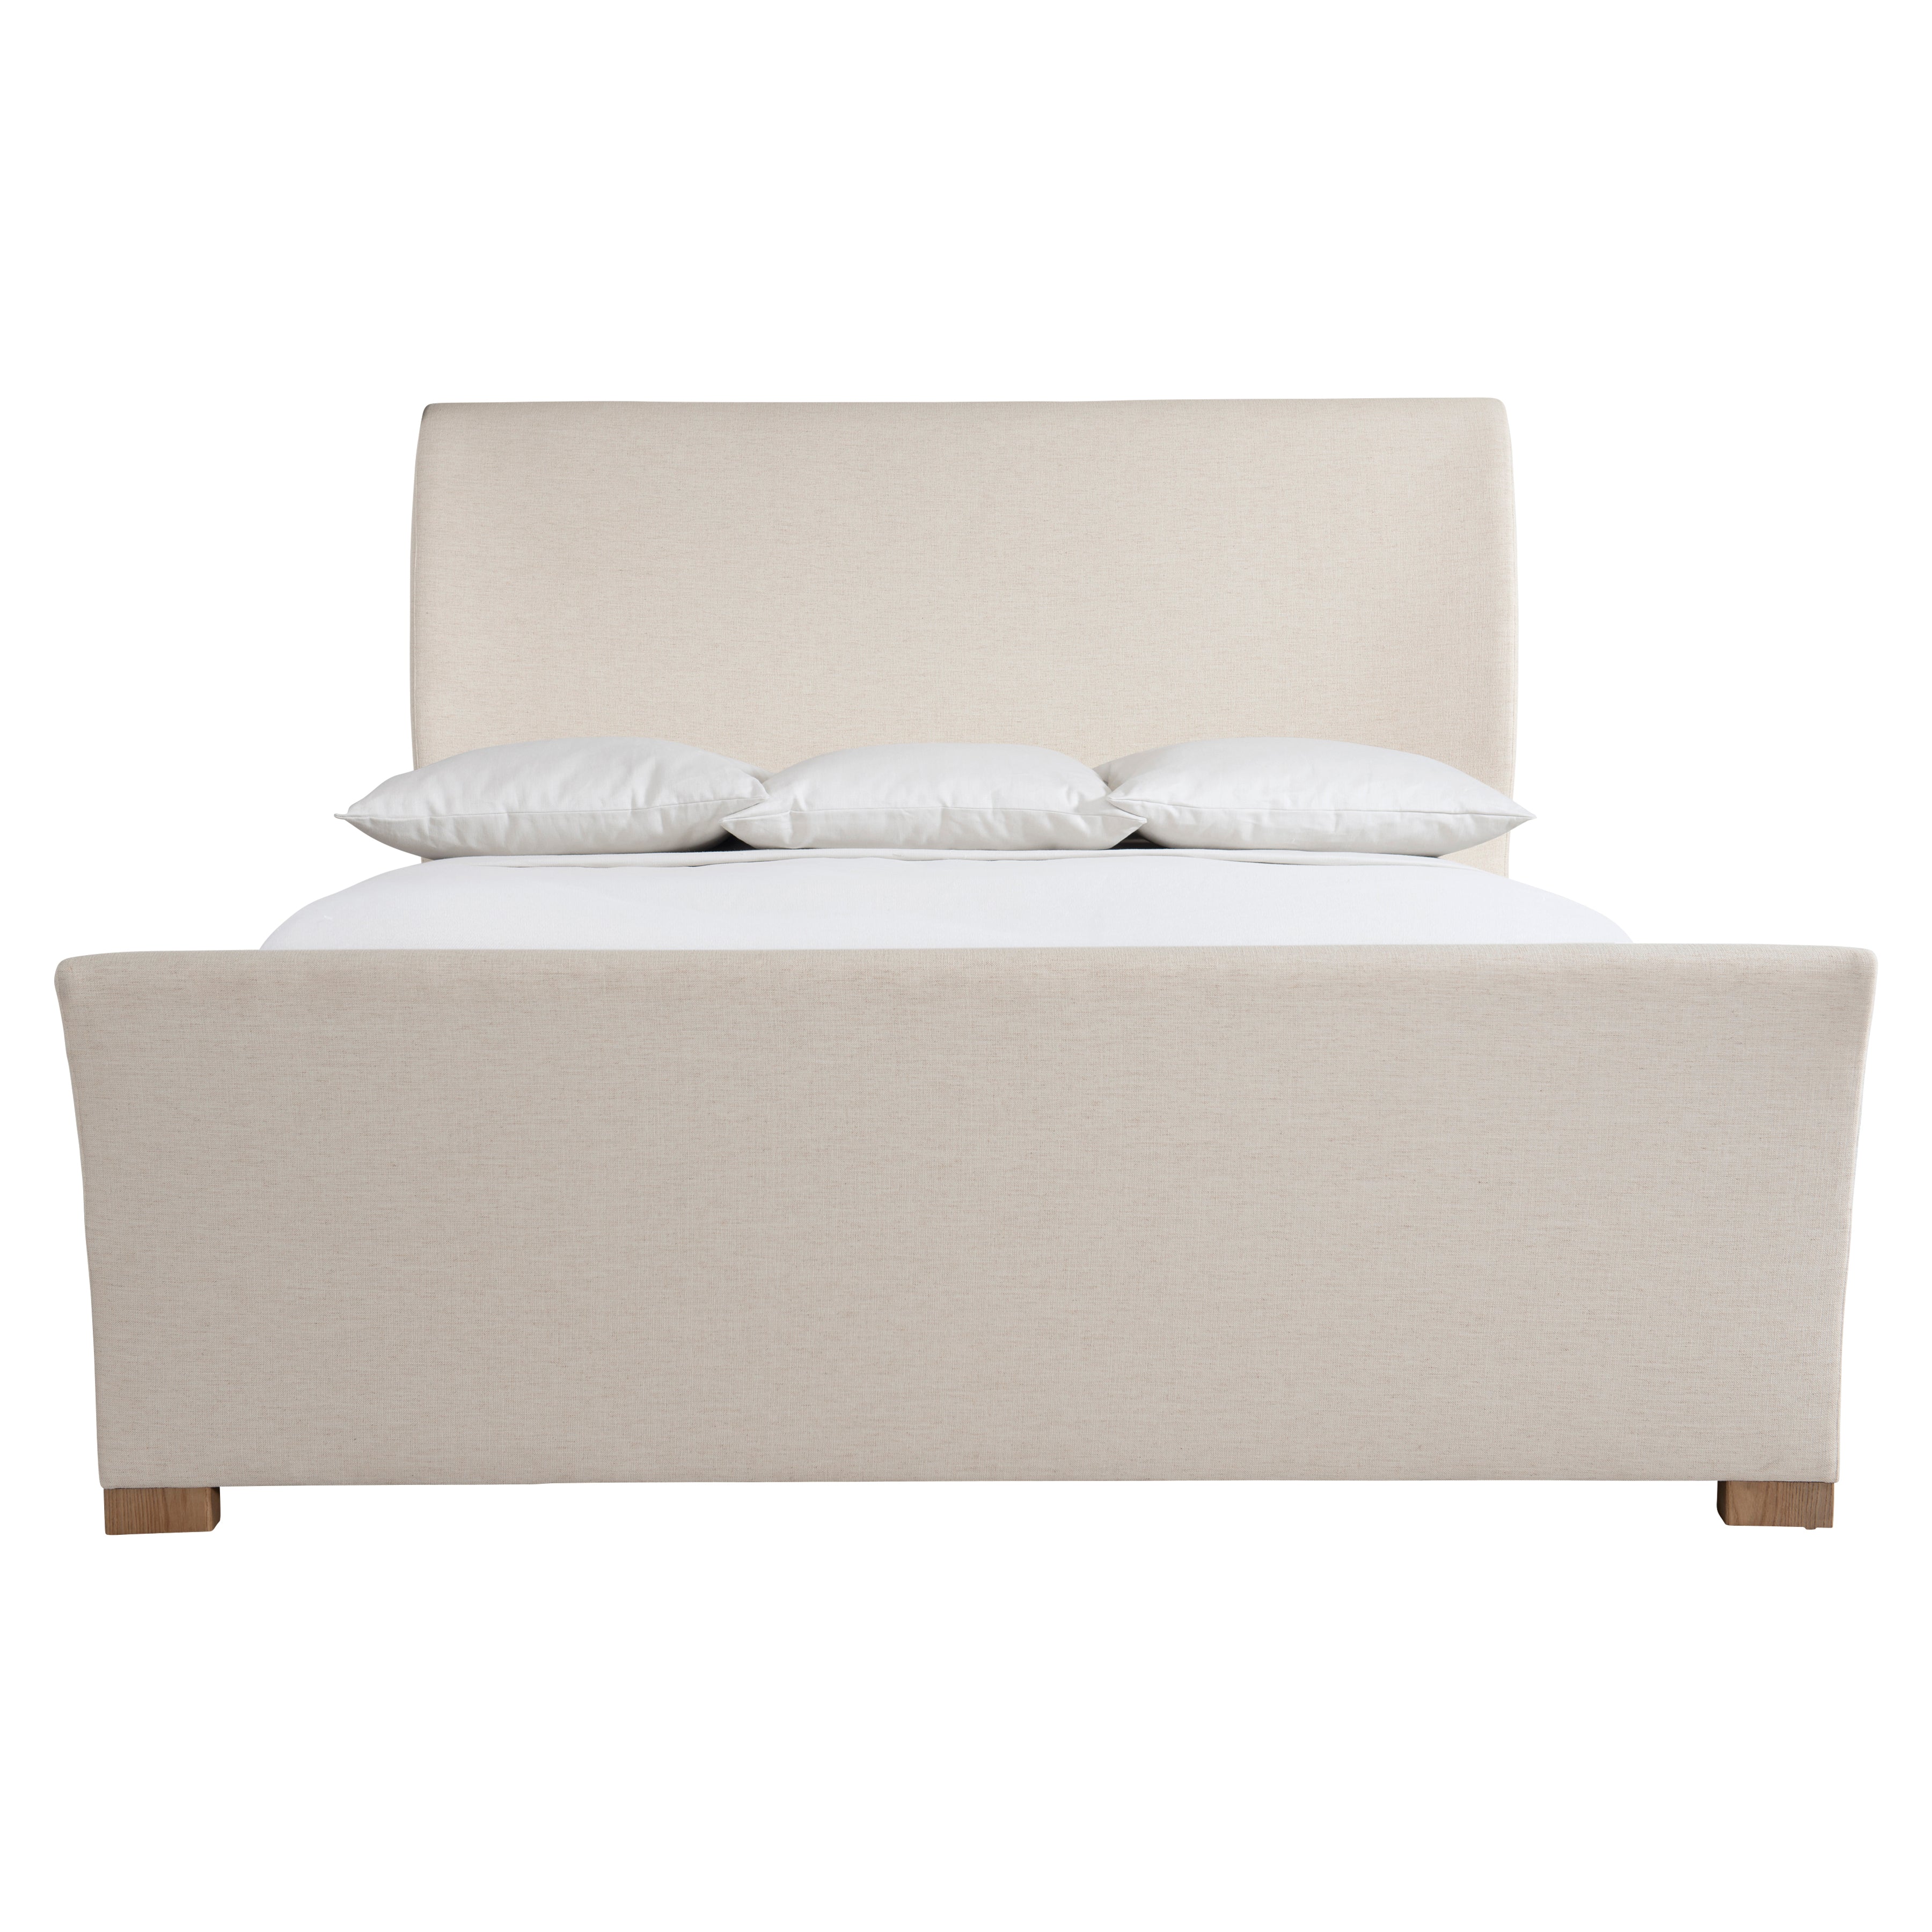 Modulum Upholstered Queen Sleigh Bed